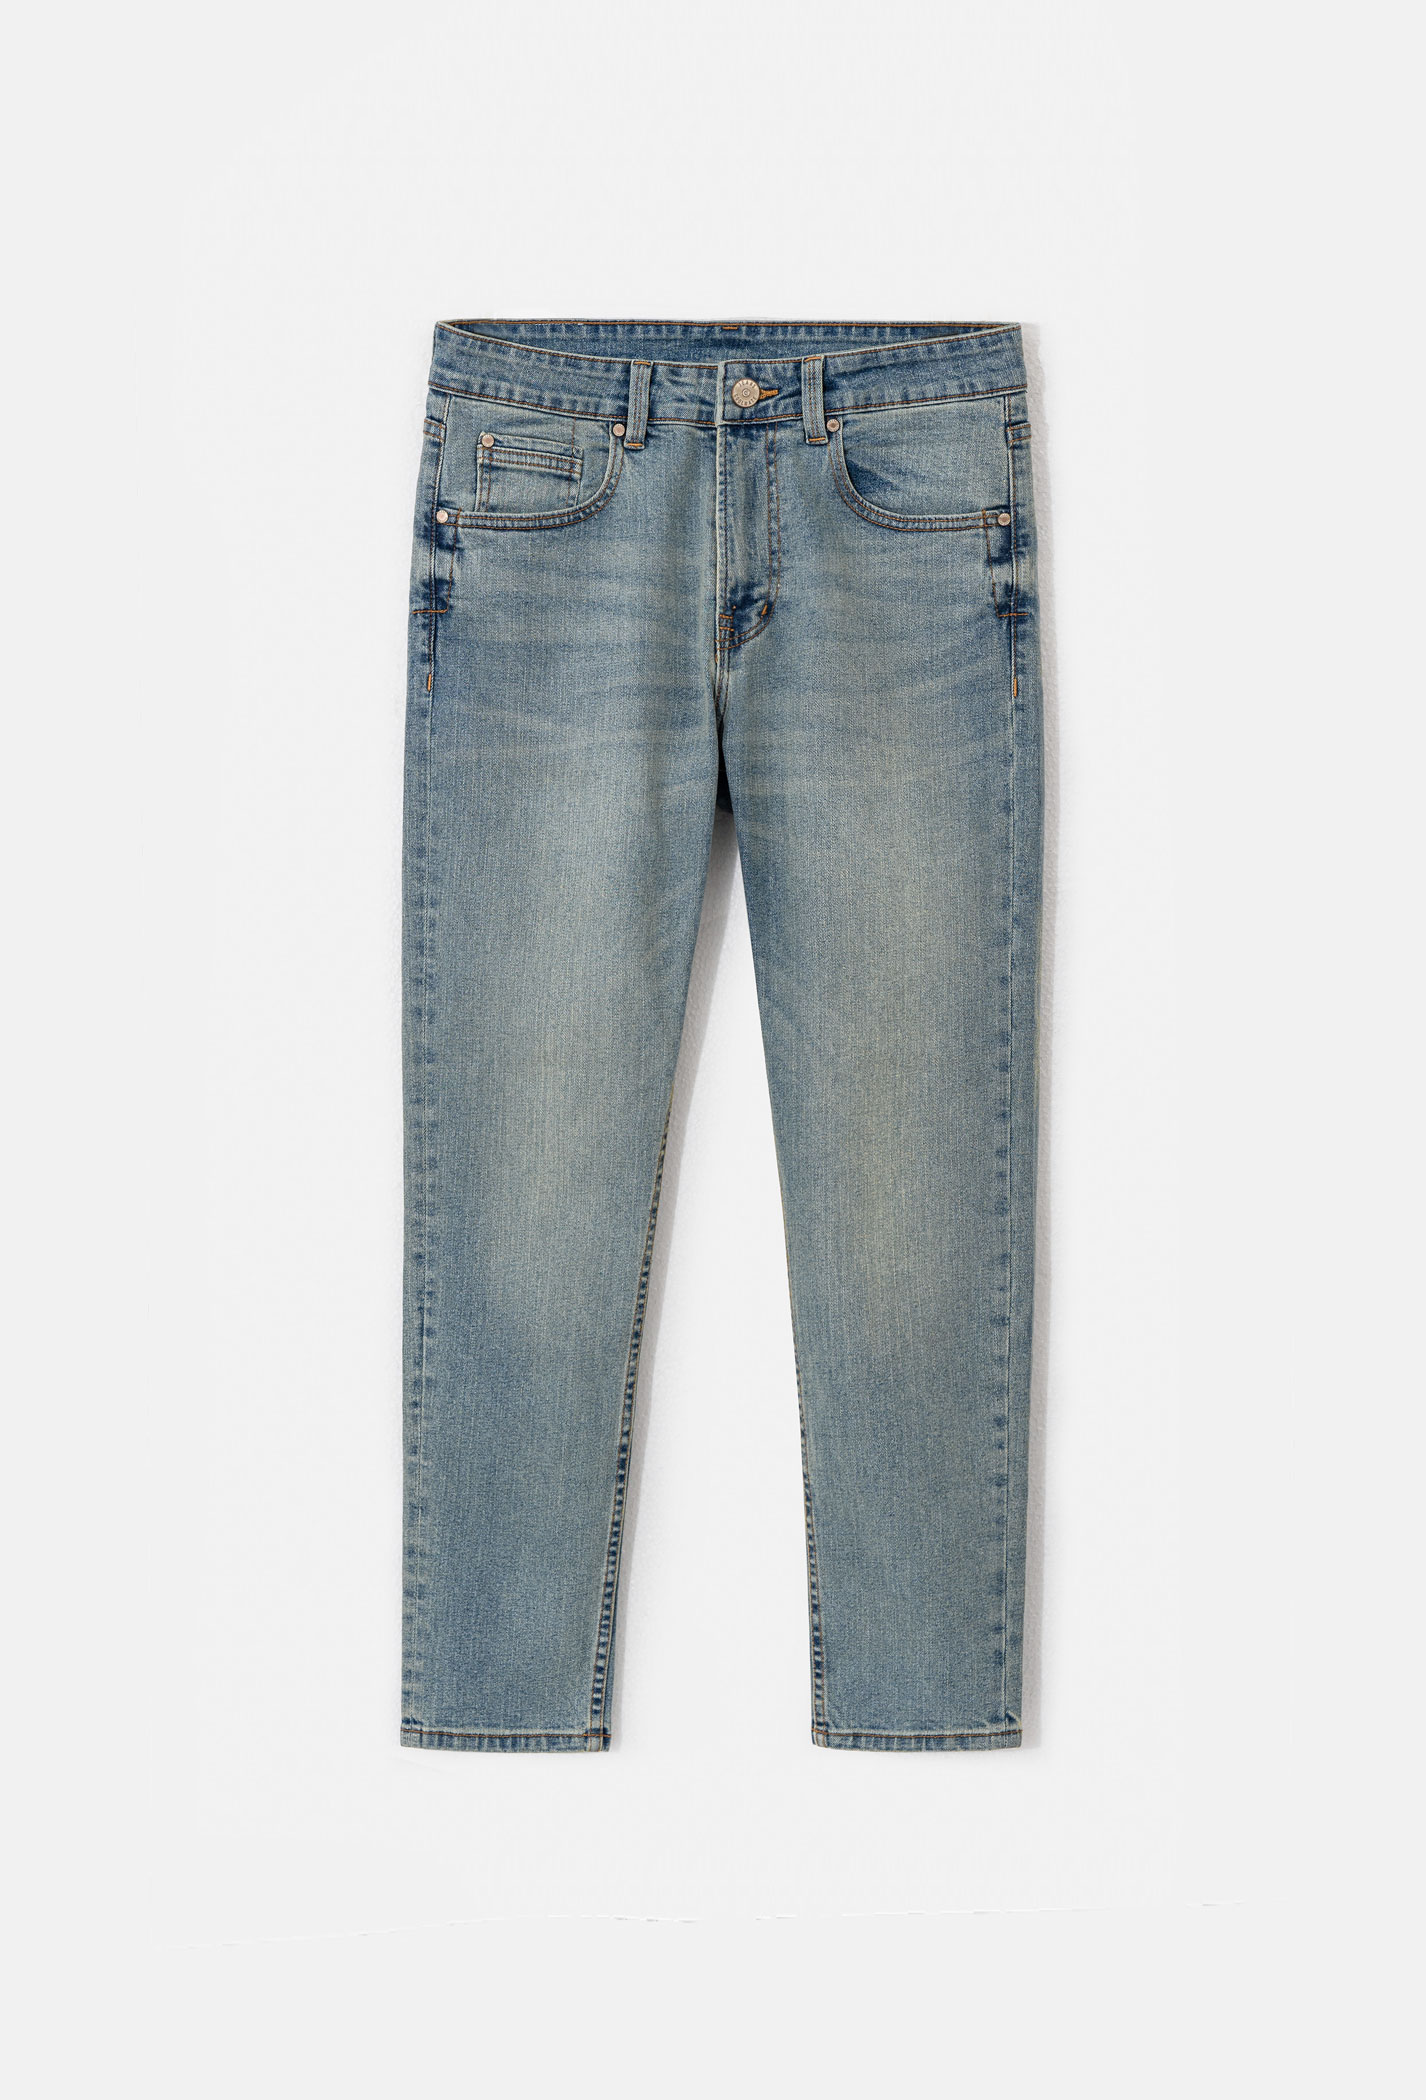 OUTLET - Quần Jeans Basic Slim V2 Xanh nhạt 1